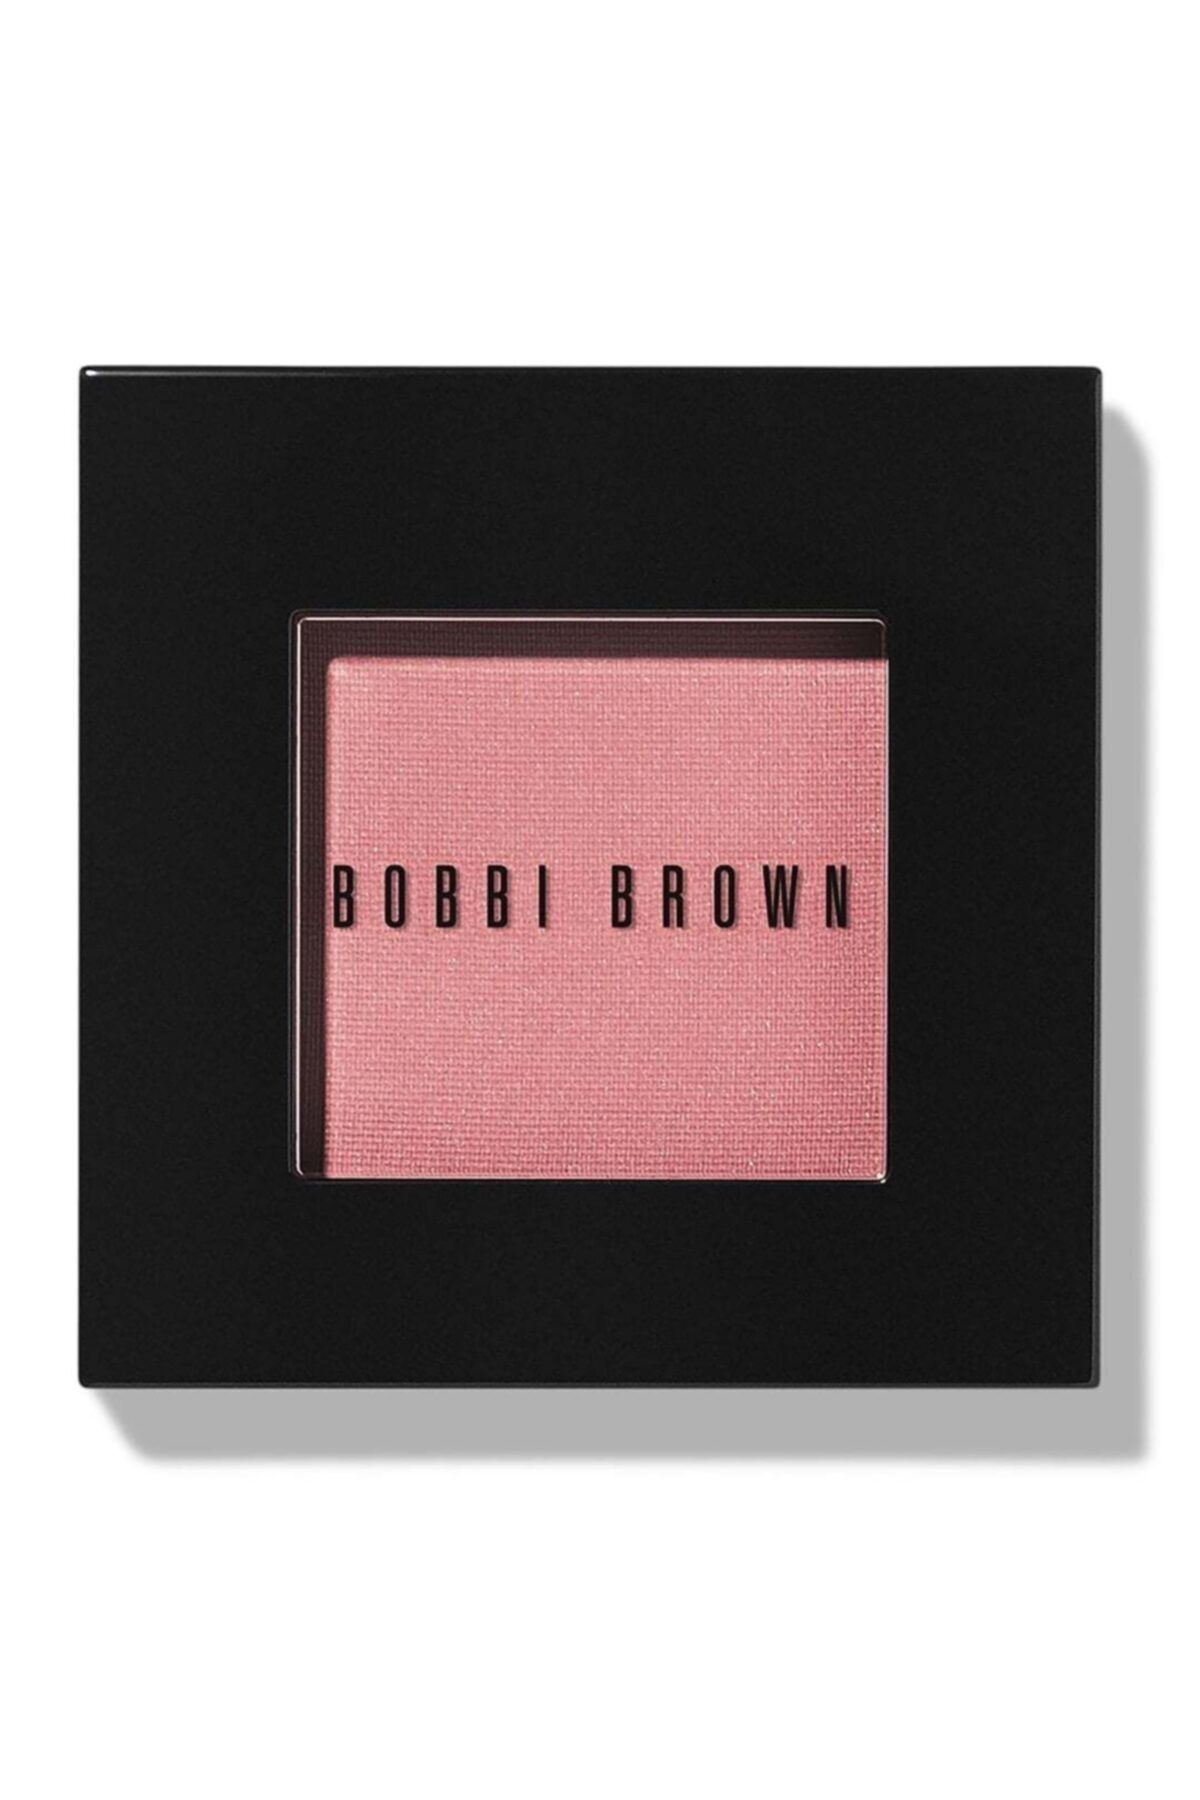 Bobbi Brown Blush / Allık 3.7 G Nectar 716170059686